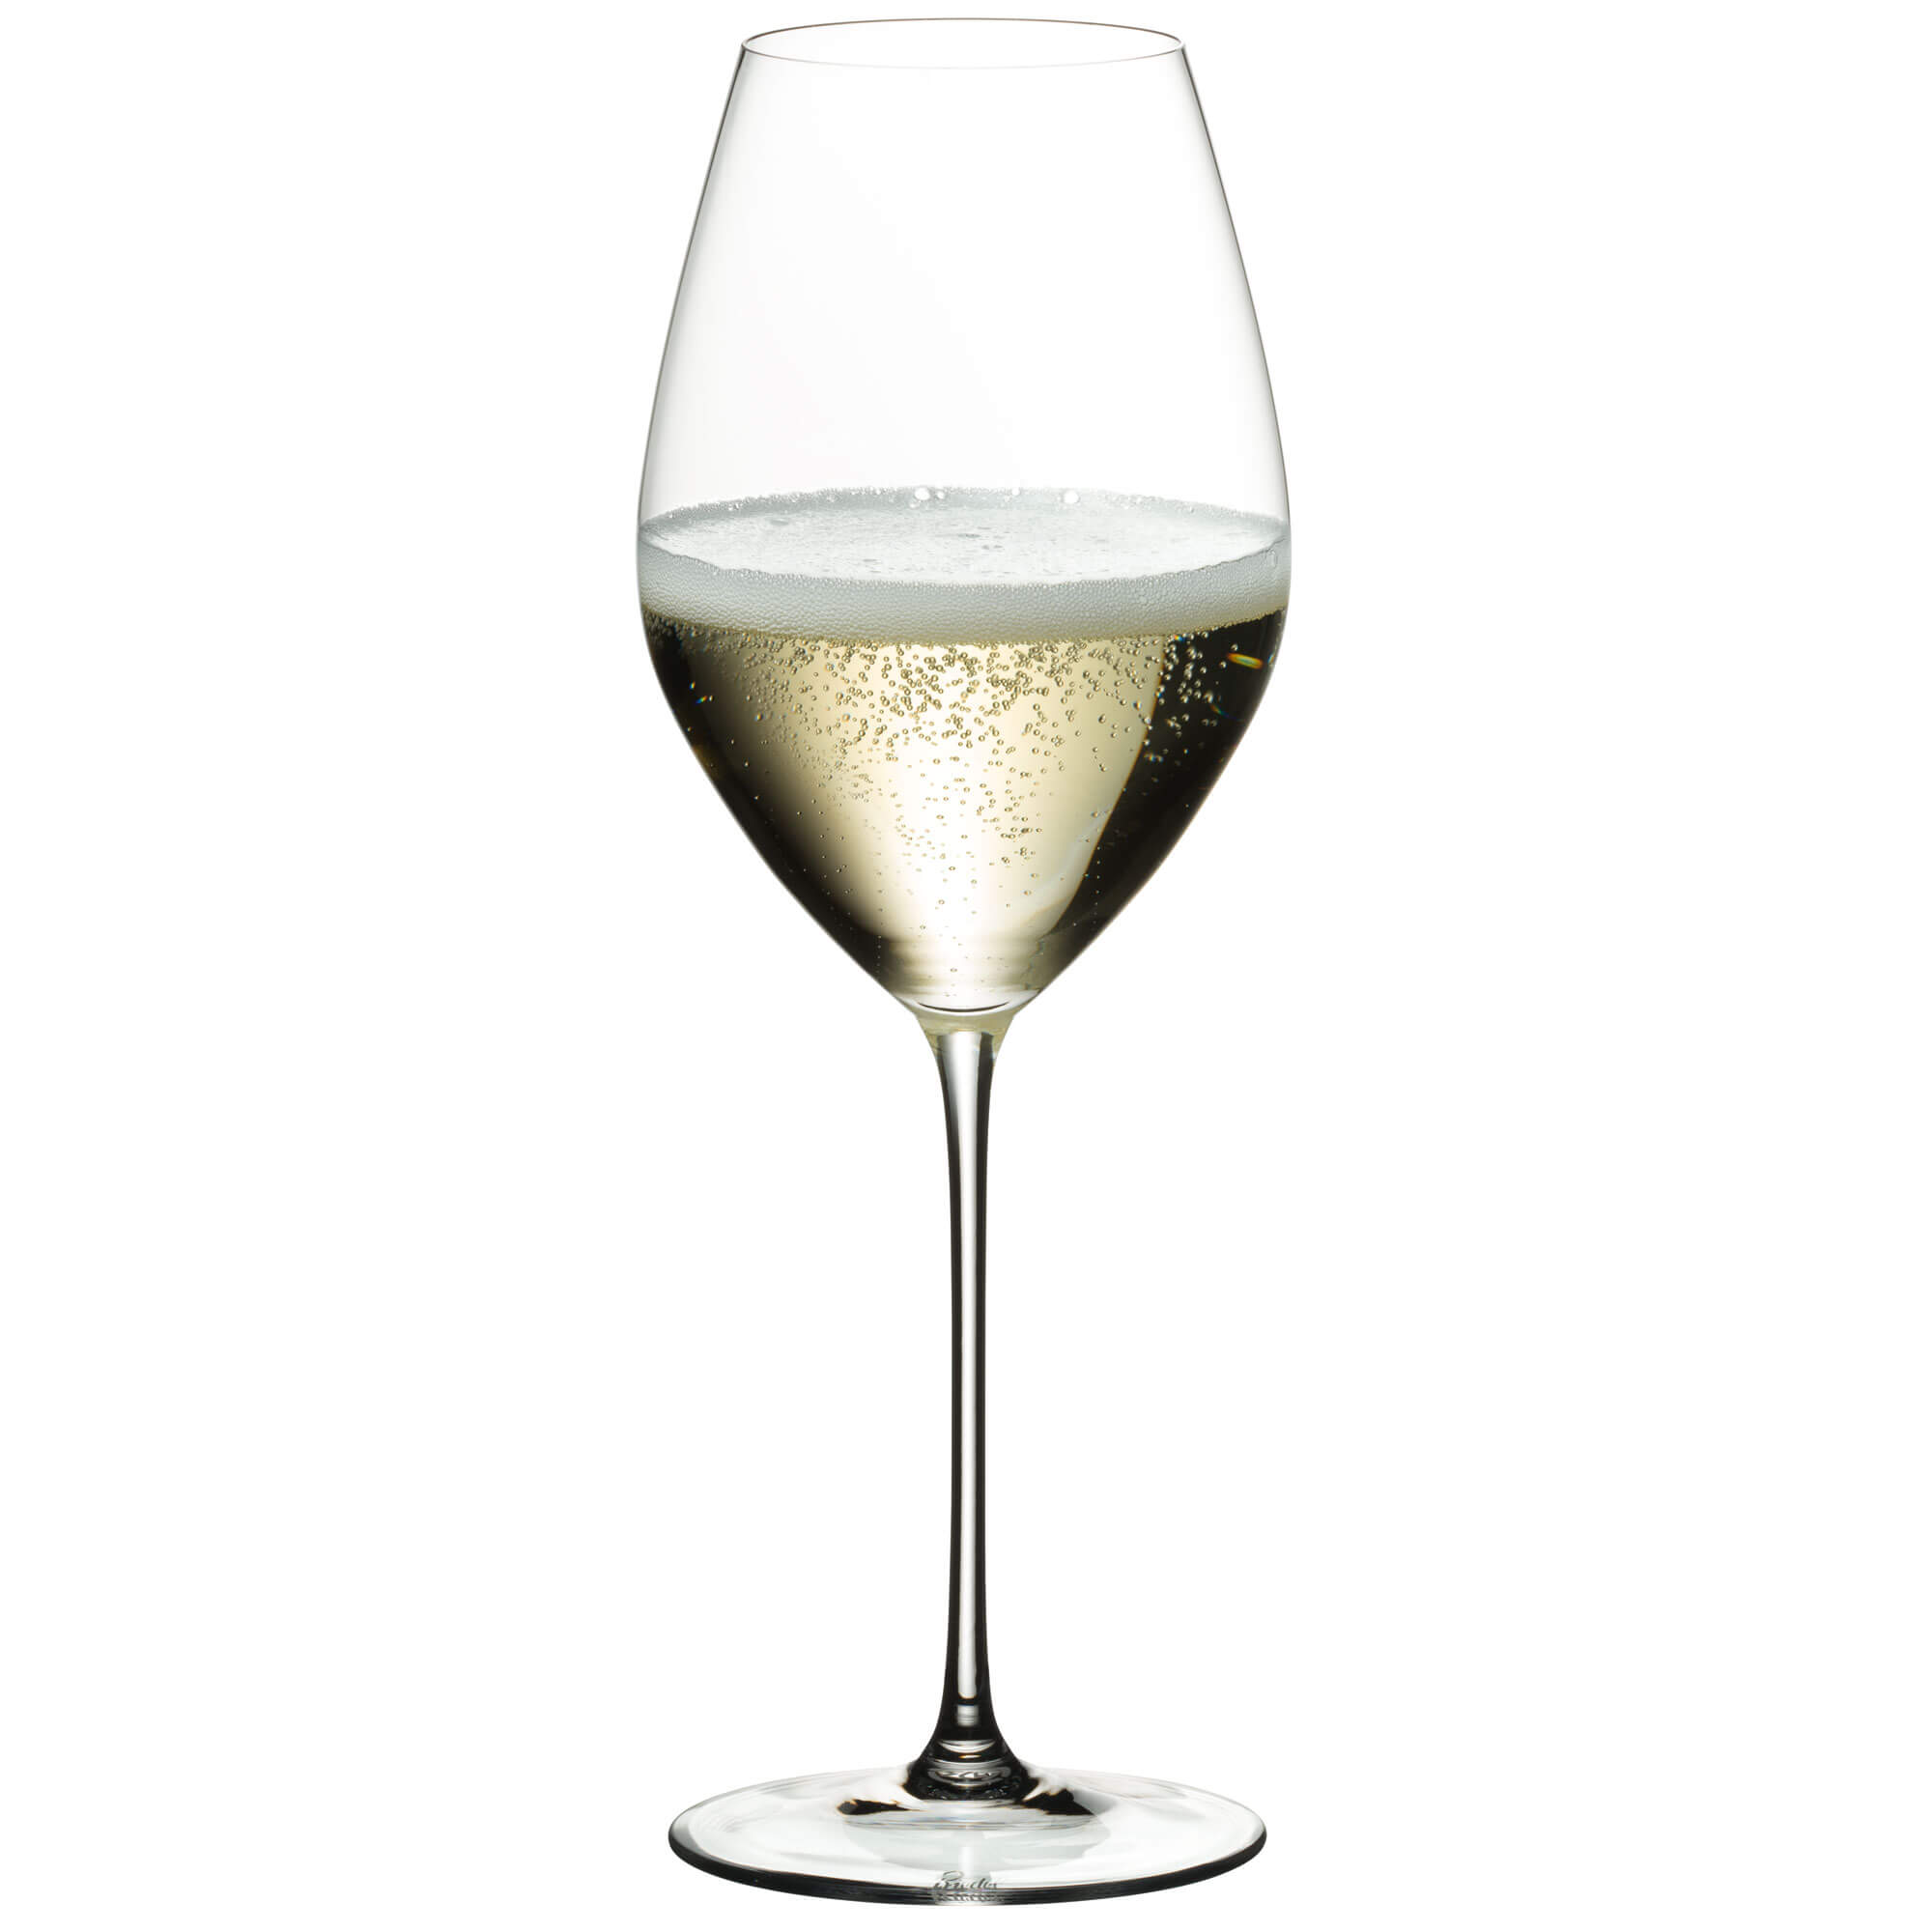 Champagnerglas Veritas, Riedel - 445ml (2 Stk.)